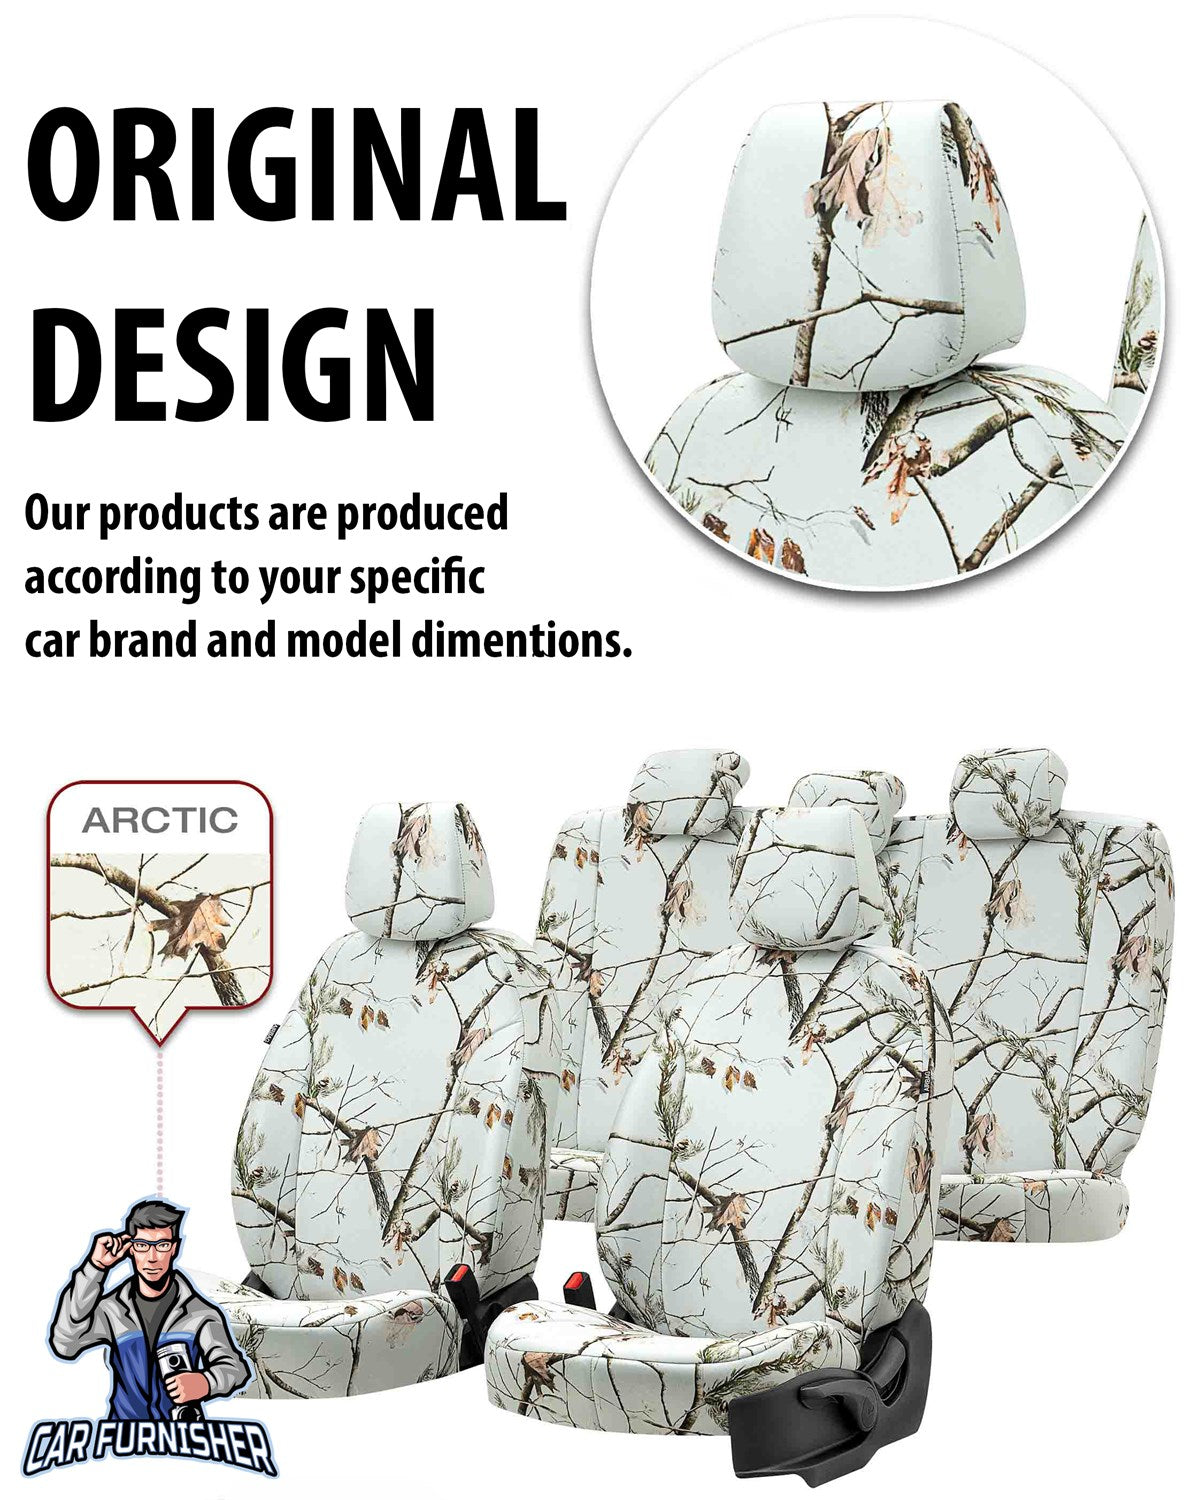 Isuzu N-Wide Seat Covers Camouflage Waterproof Design Kalahari Camo Waterproof Fabric